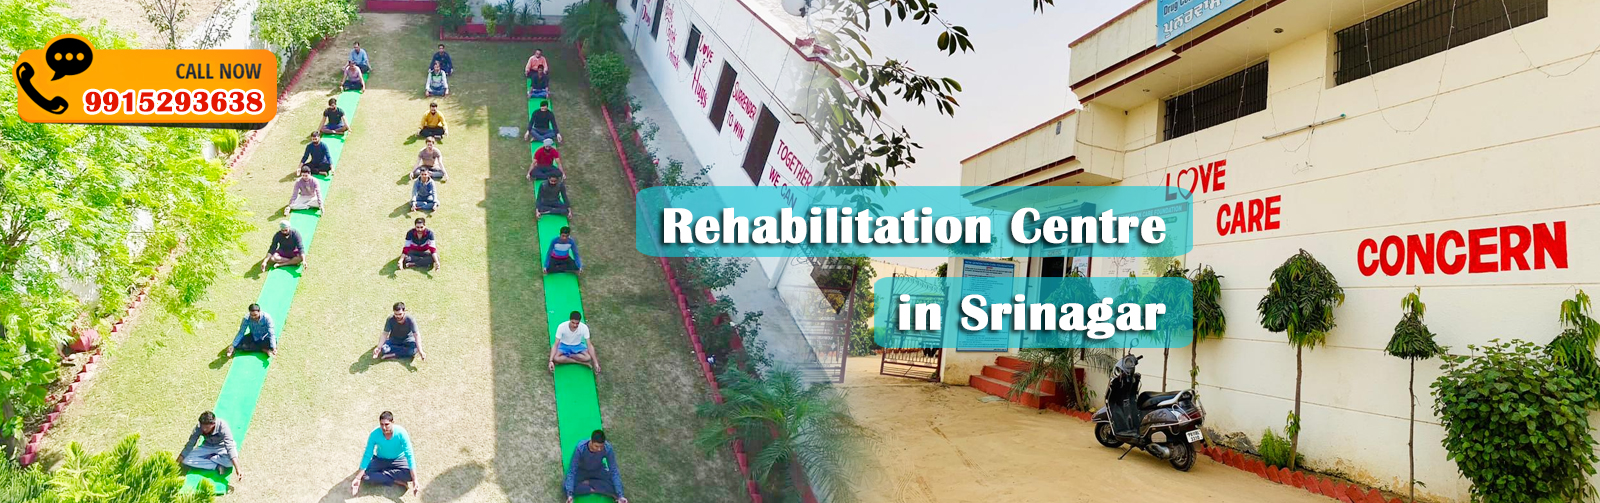 Rehabilitation Centre in Srinagar